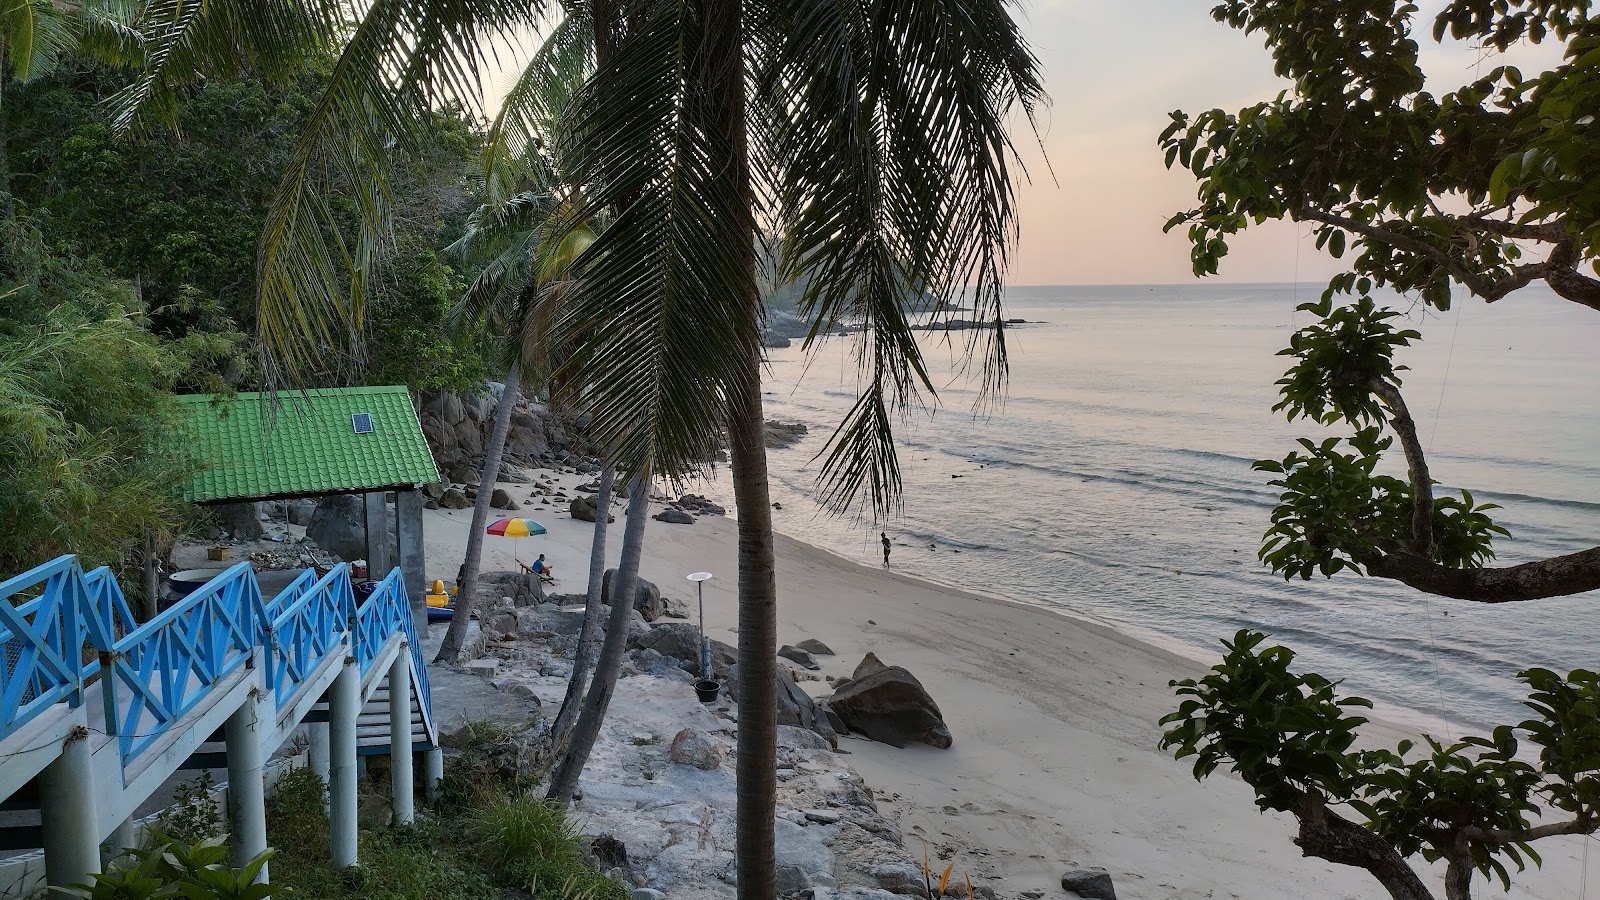 Photo of Mee Sook Beach beach resort area